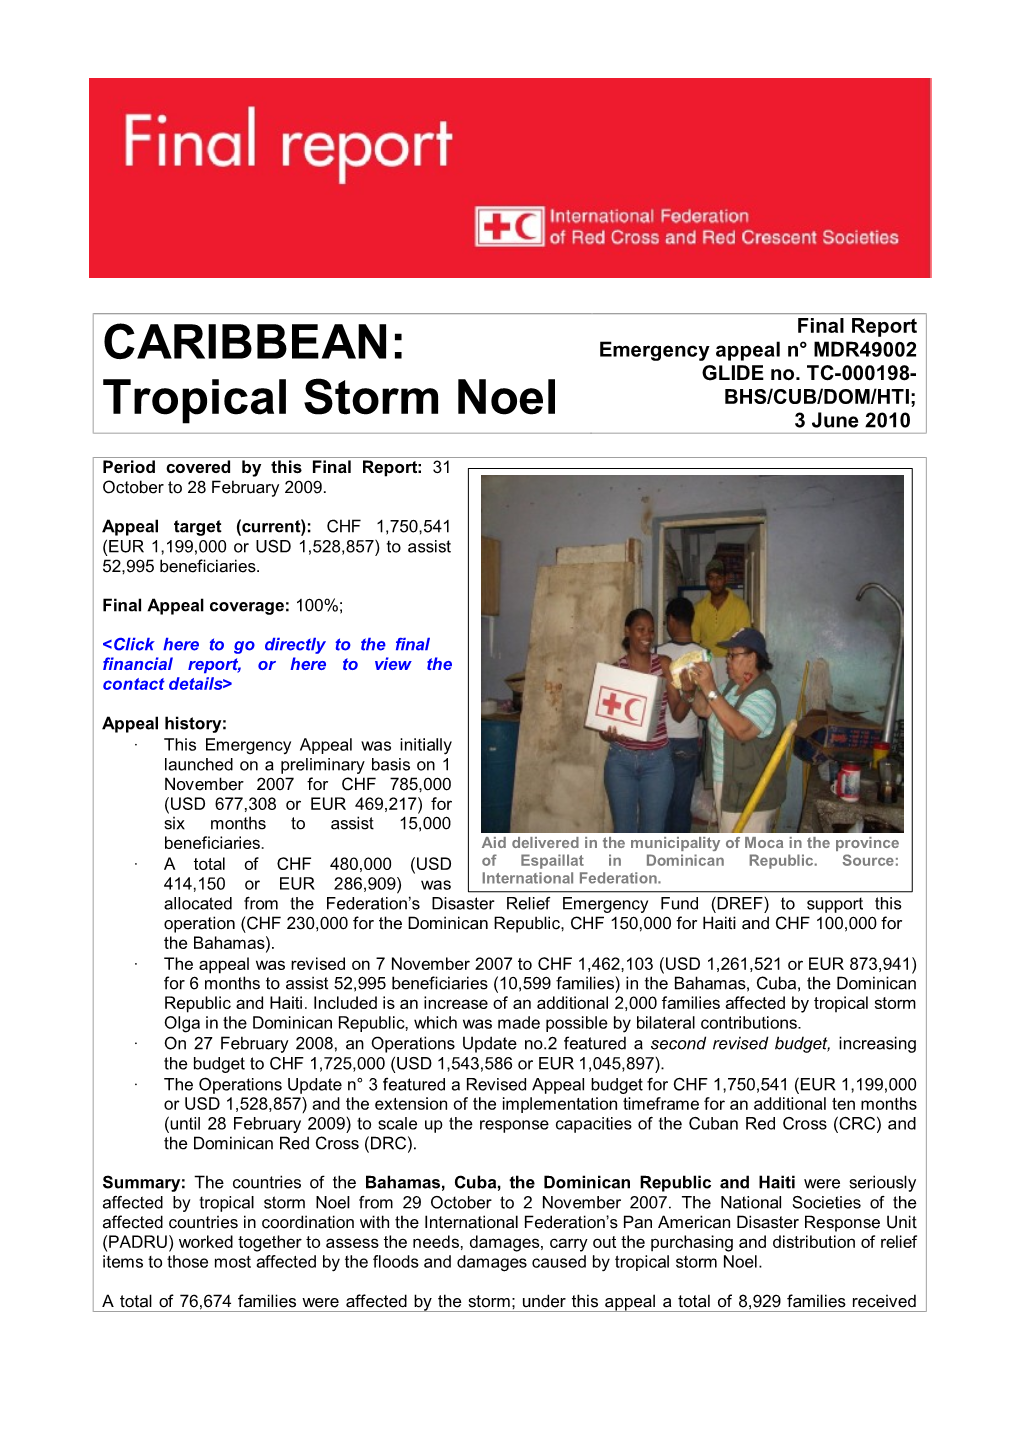 CARIBBEAN: Tropical Storm Noel